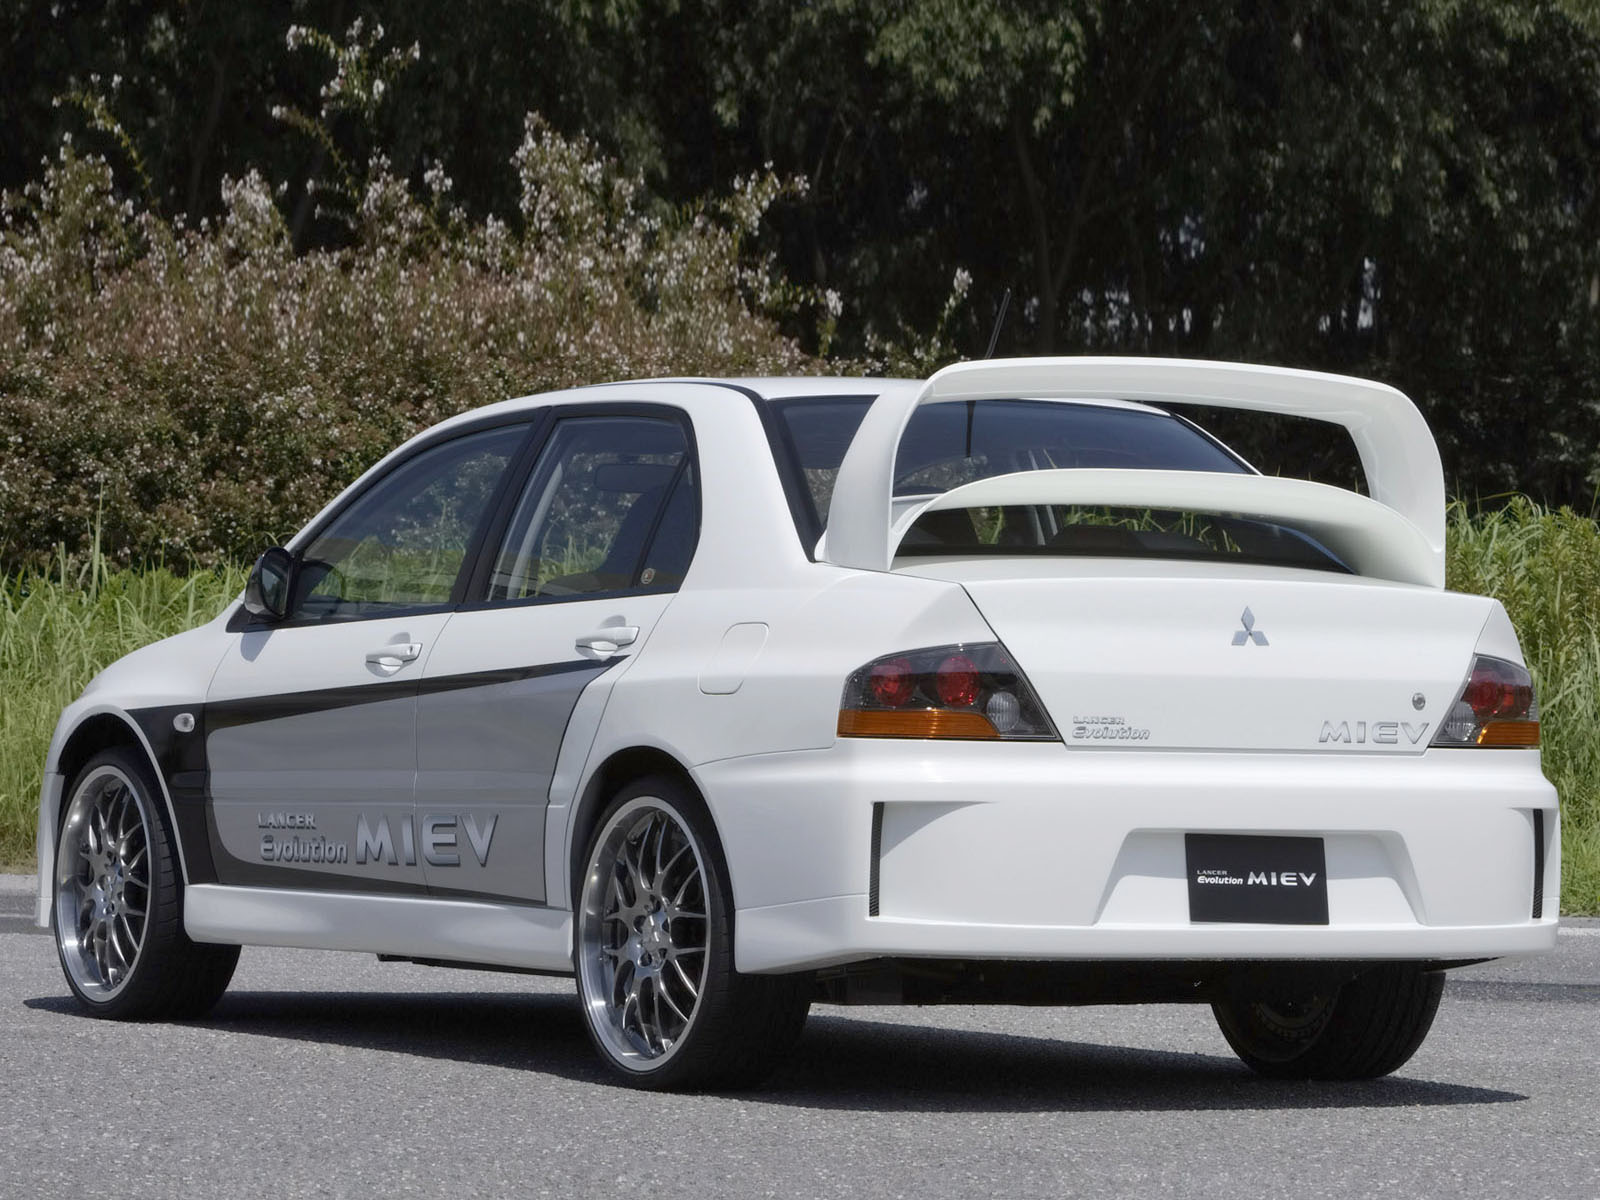 2005 Mitsubishi Lancer Evolution IX MIEV Review